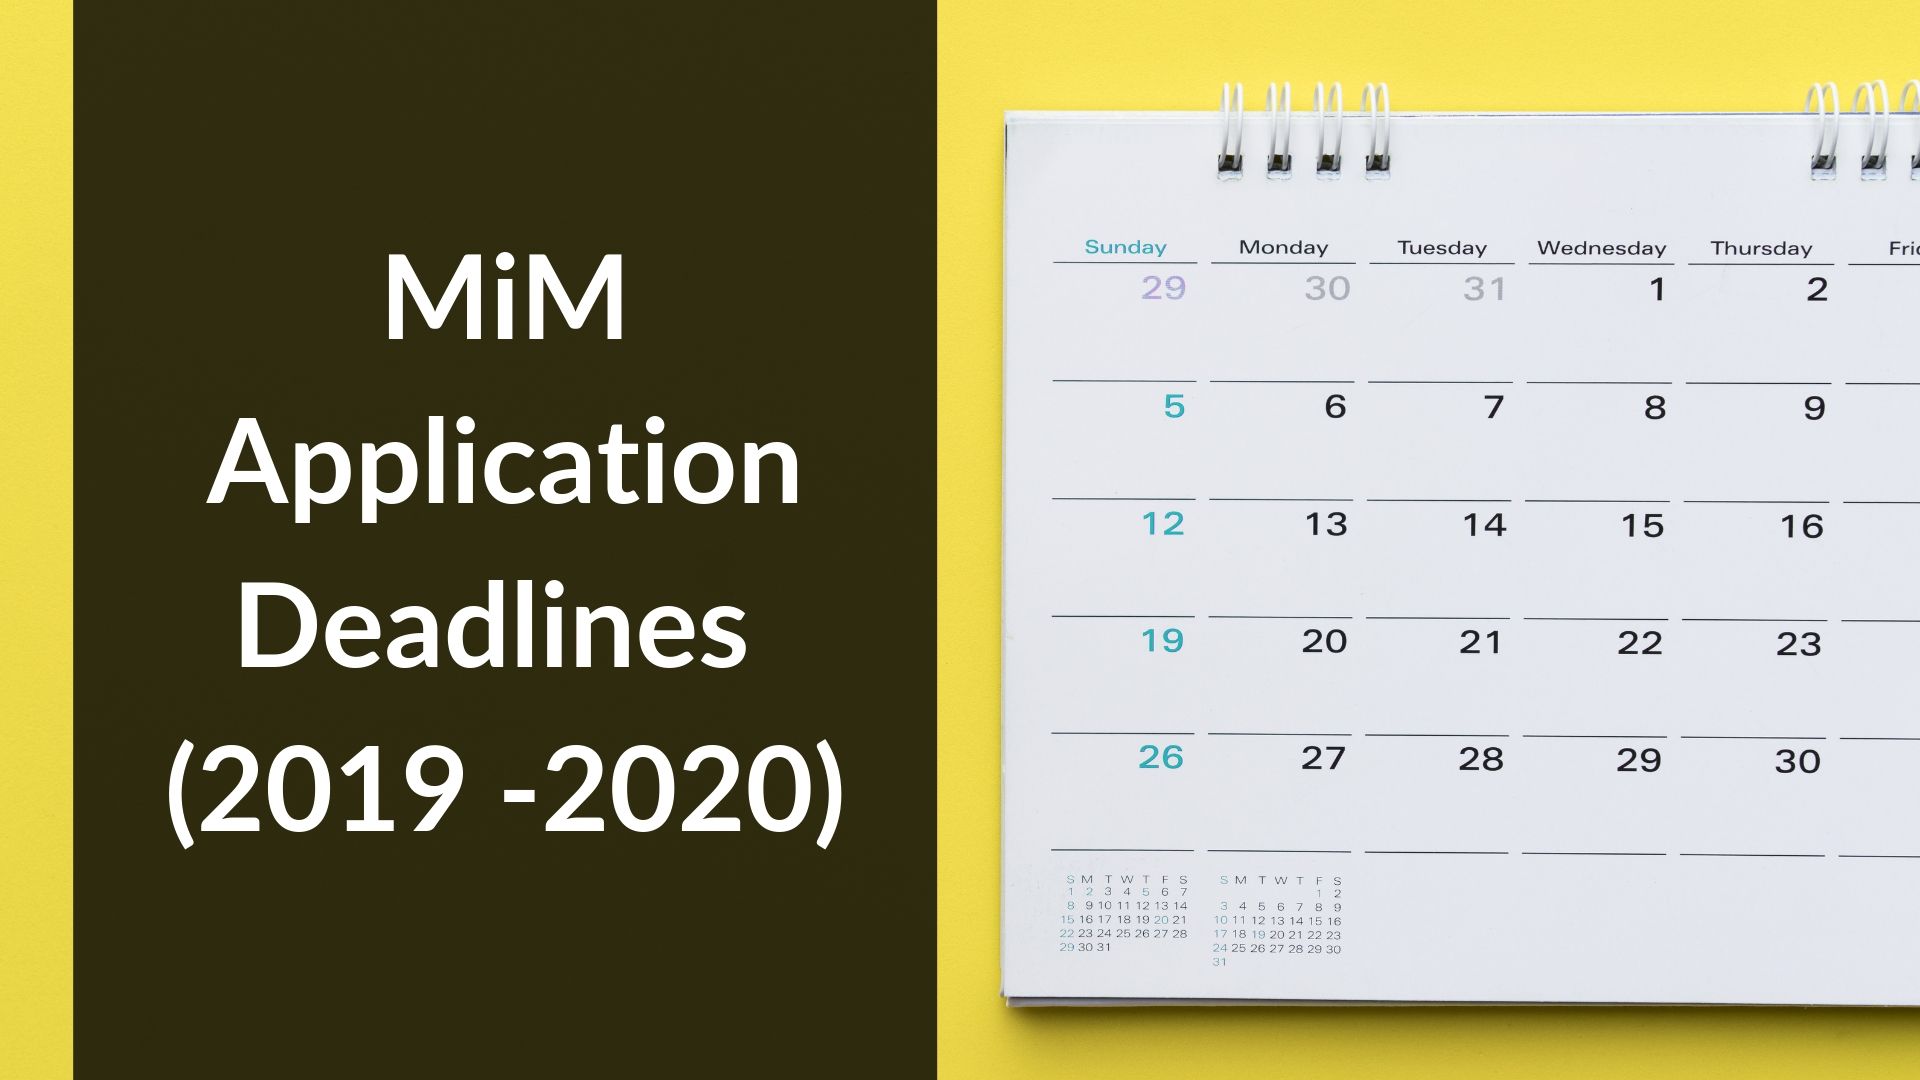 MiM Application Deadlines 2019 – 2020